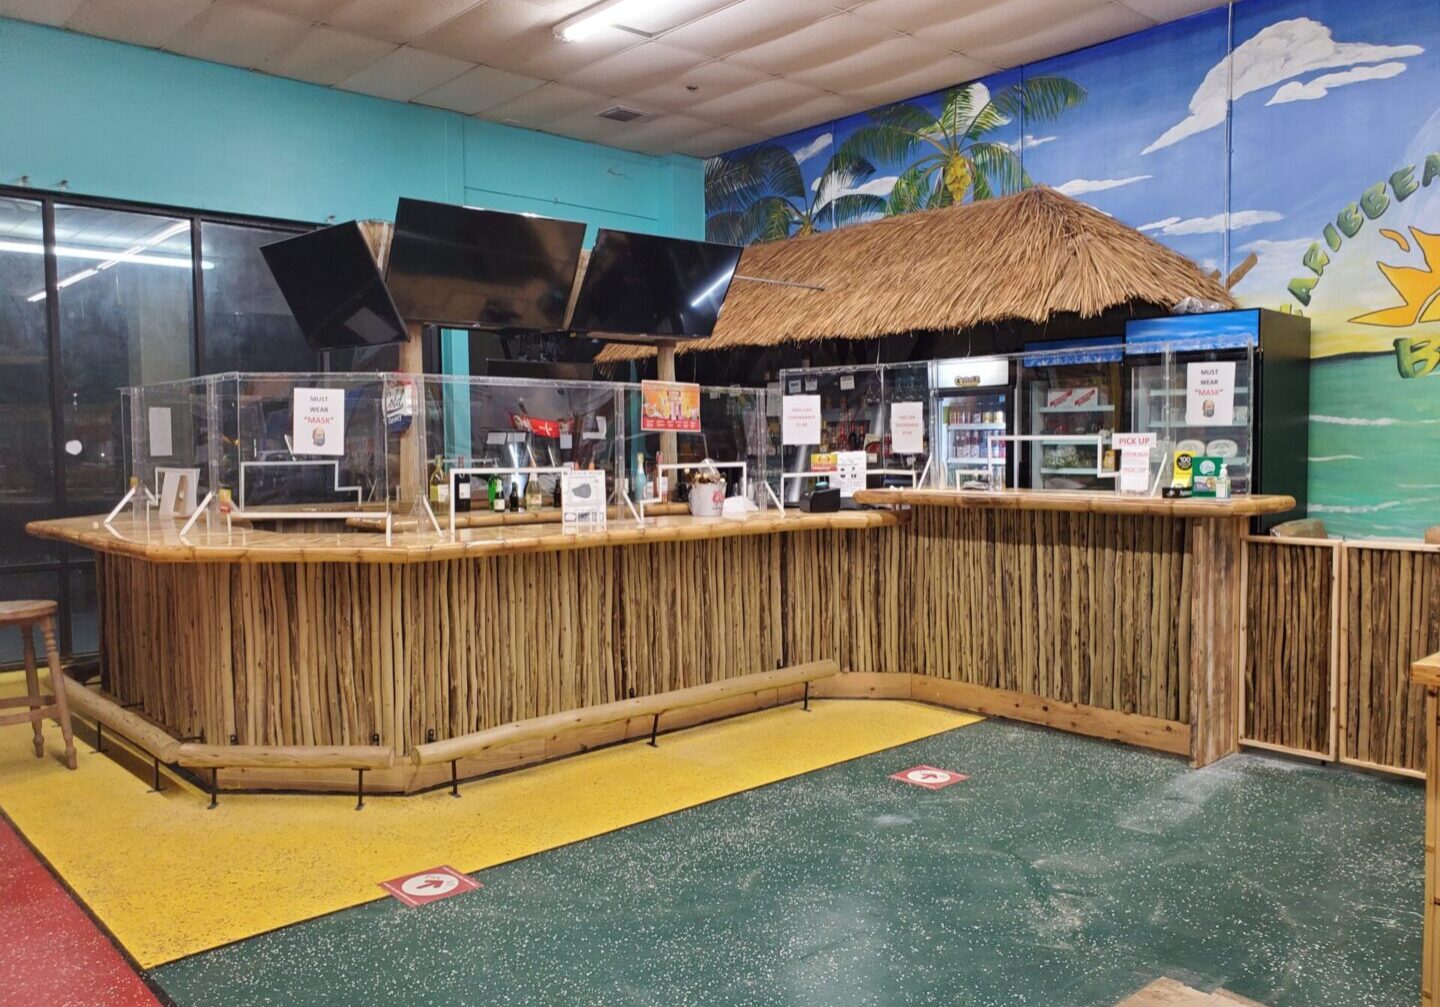 The Caribbean Sunshine Bakery counter